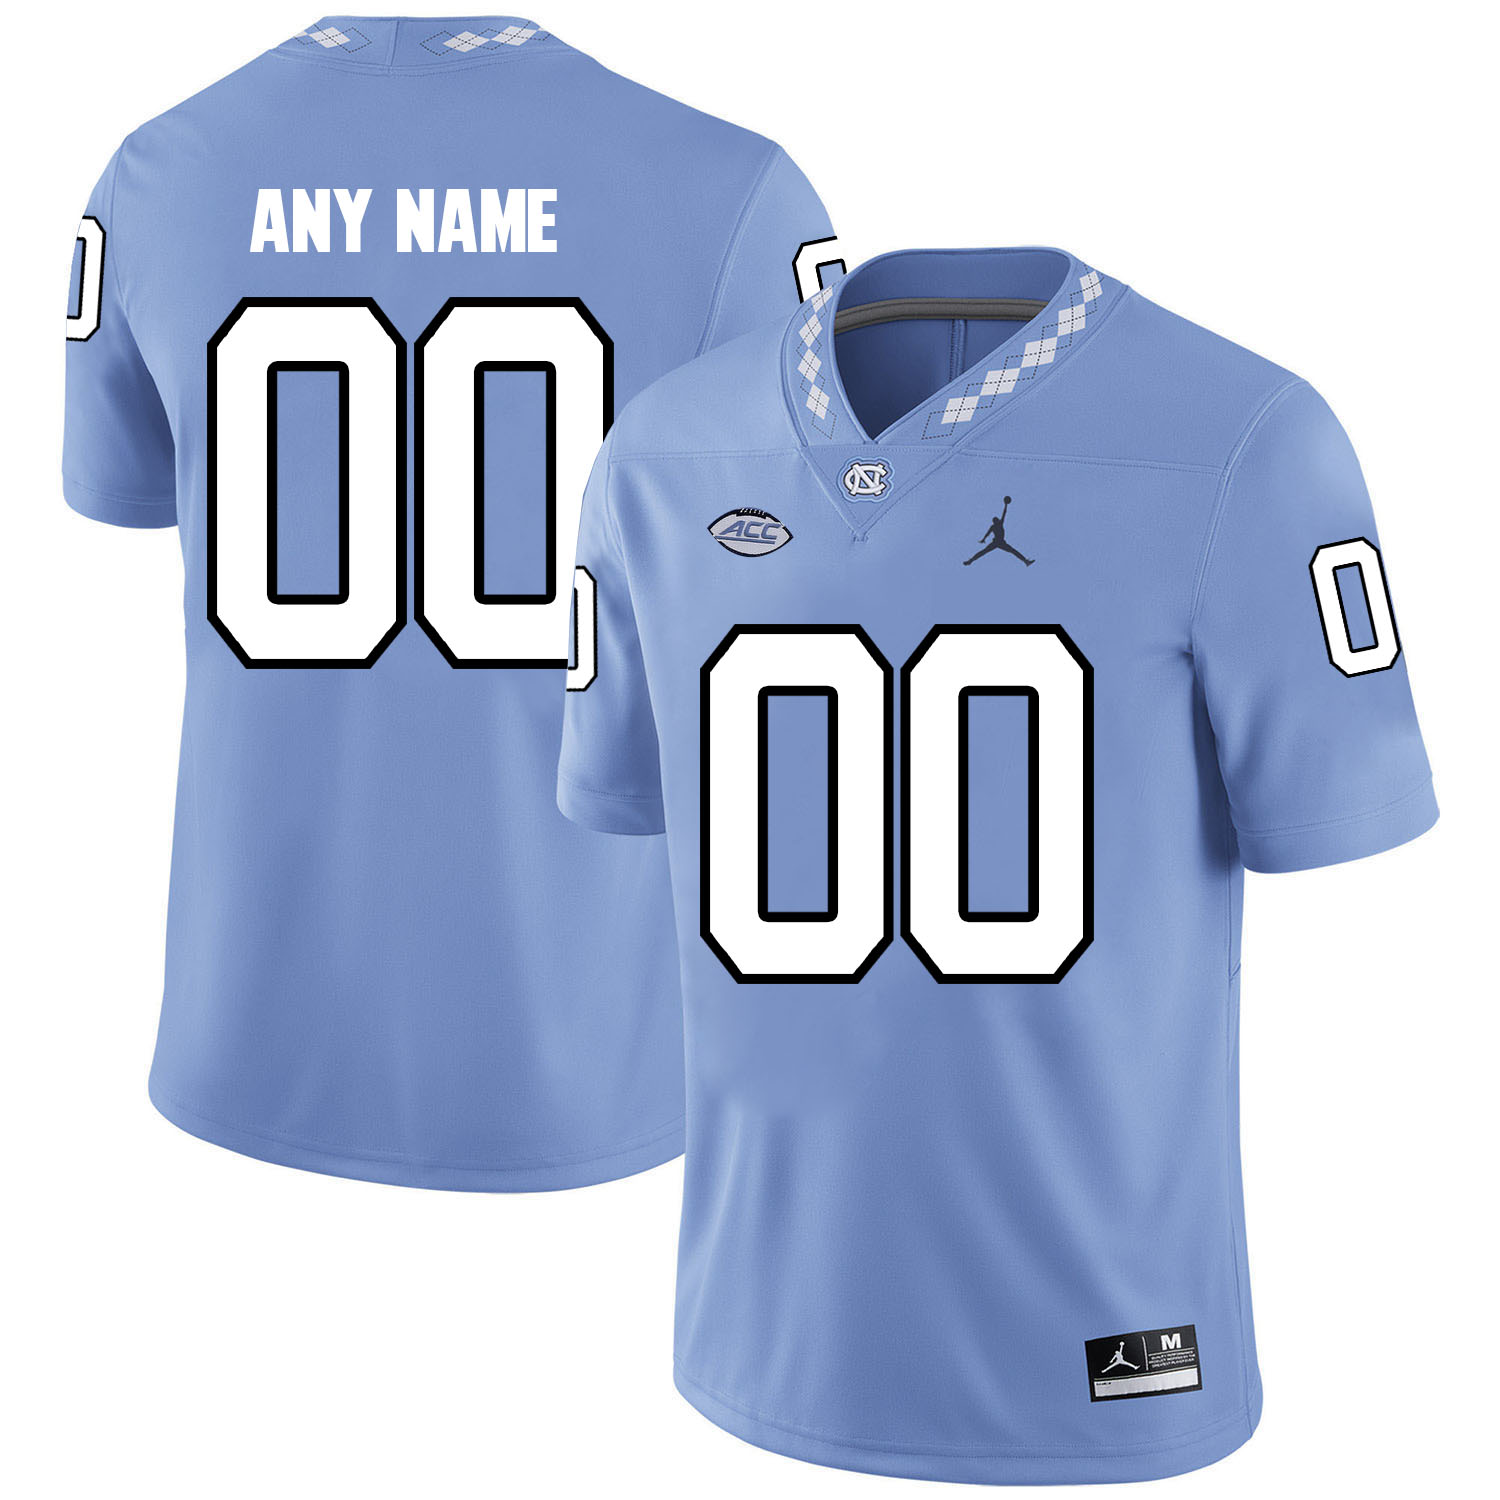 North Carolina Tar Heels Men's Customized Blue College Football Jersey